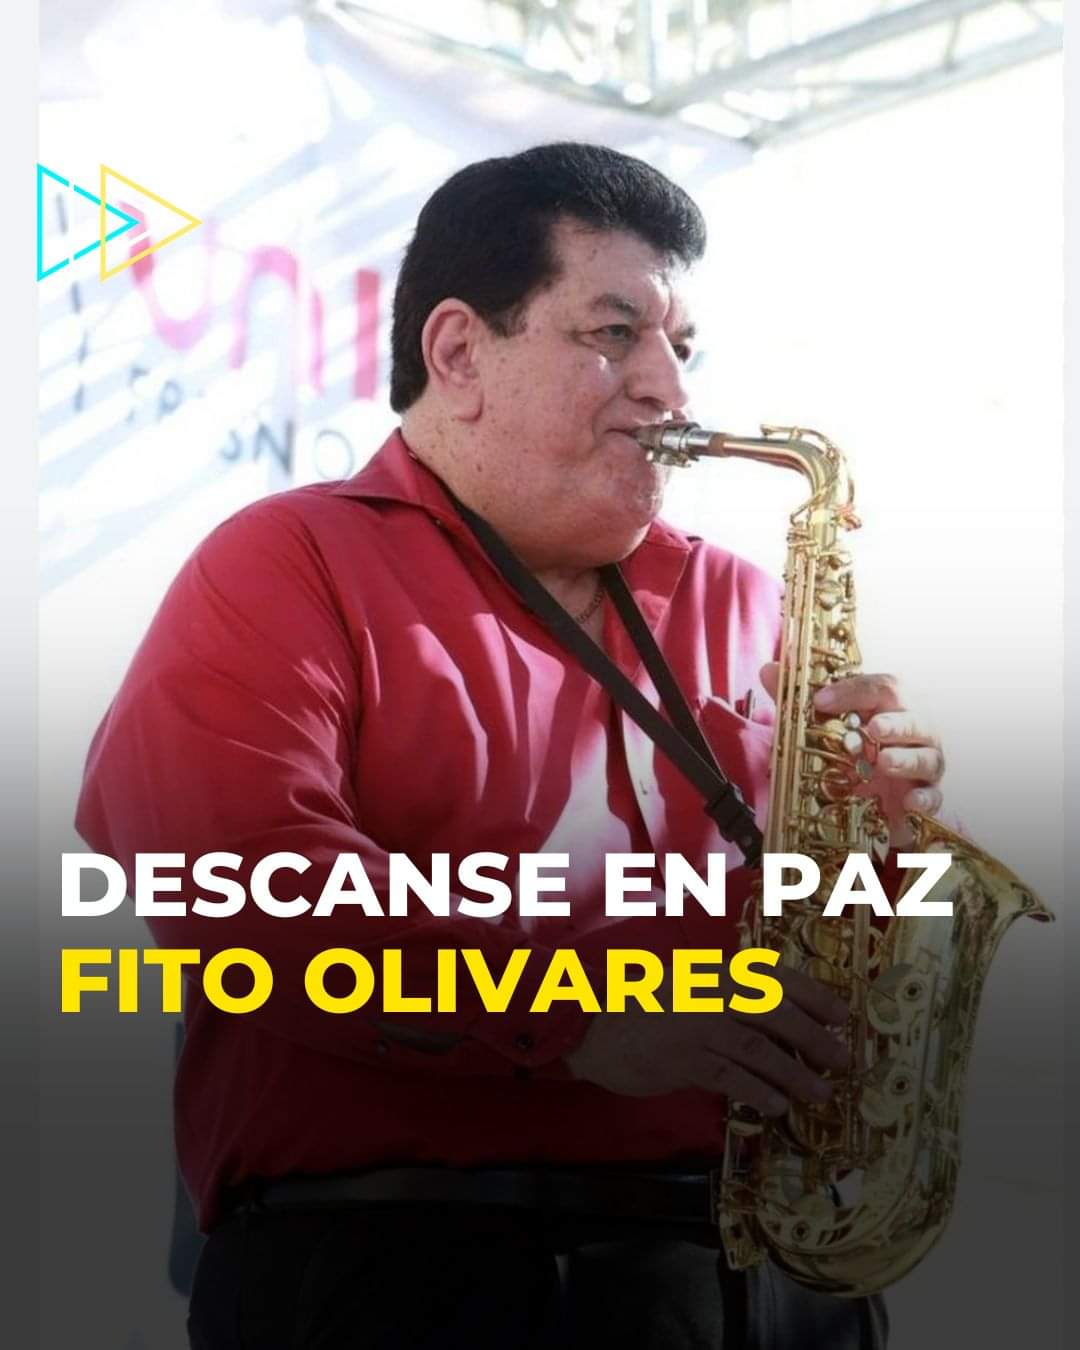 Última hora: Falleció ‘El rey del saxofón’, Fito Olivares